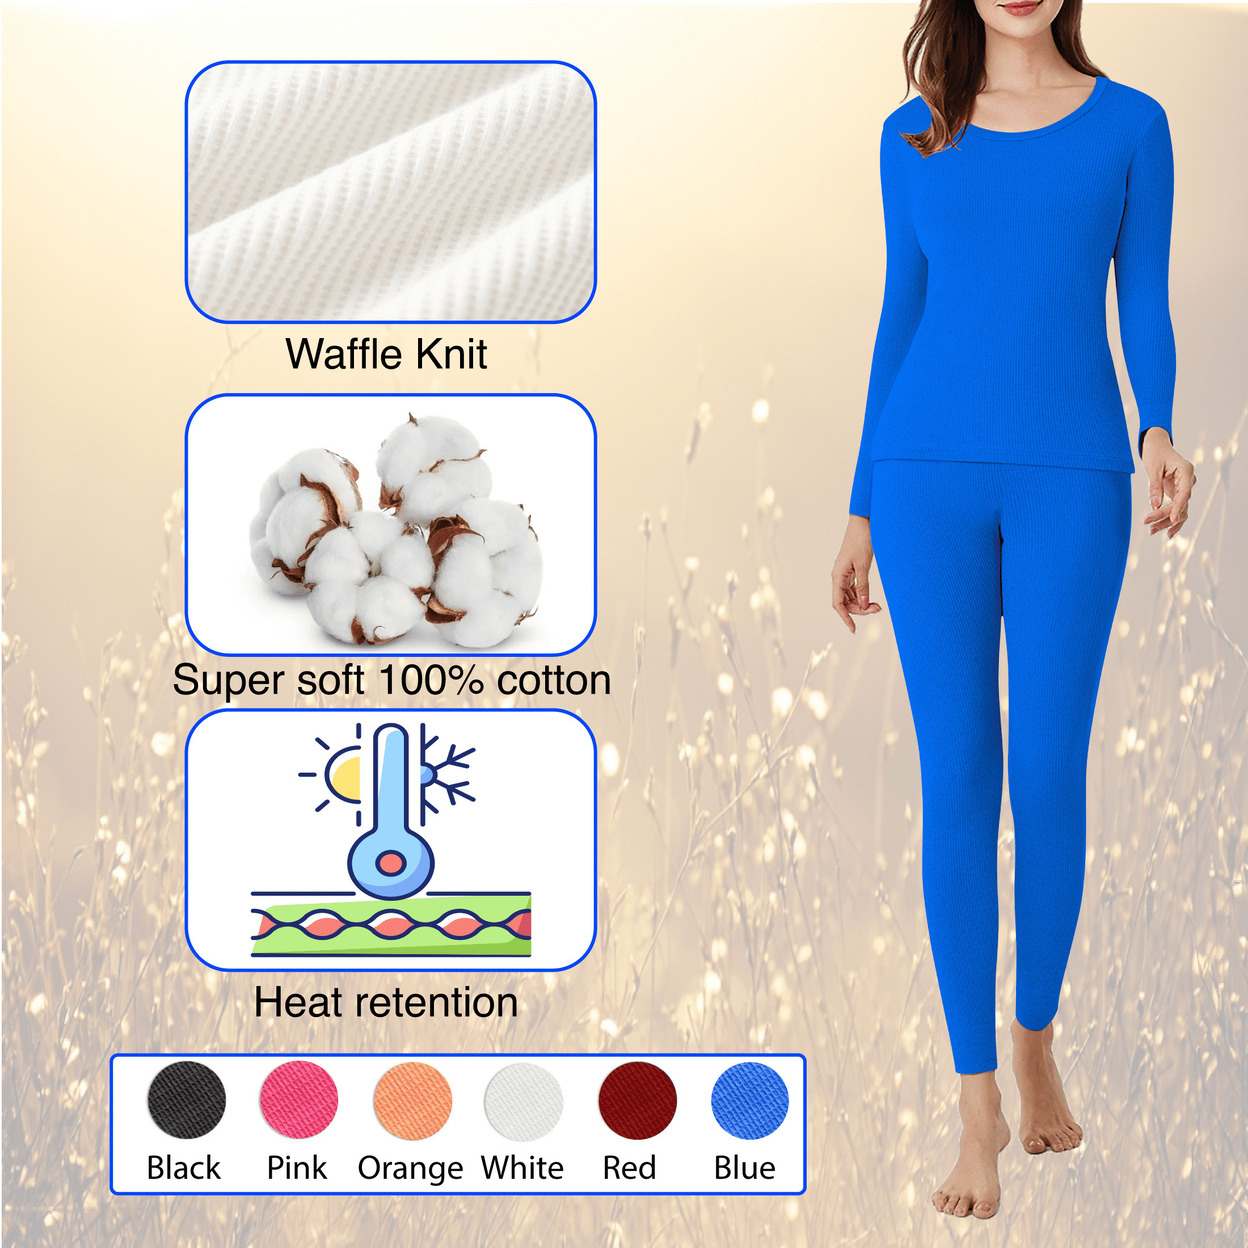 2-Piece: Women's Ultra Soft Cotton Waffle Knit Thermal Sets - White, Large